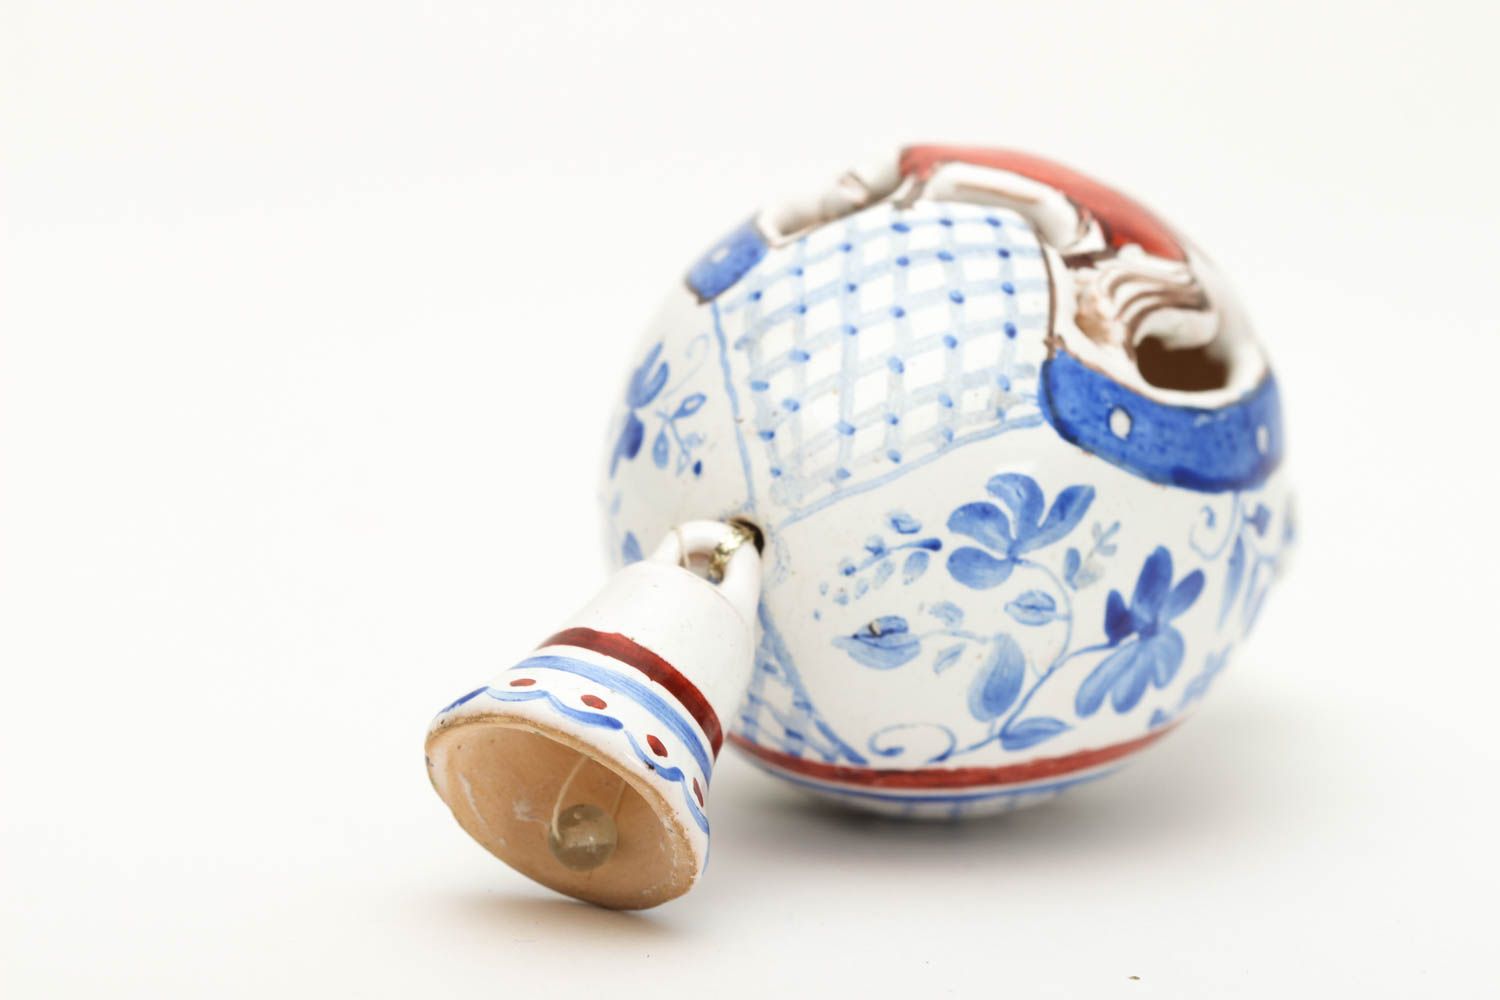 Keramik Handarbeit Deko Anhänger Keramik Deko Interieur Idee mit Bemalung foto 4